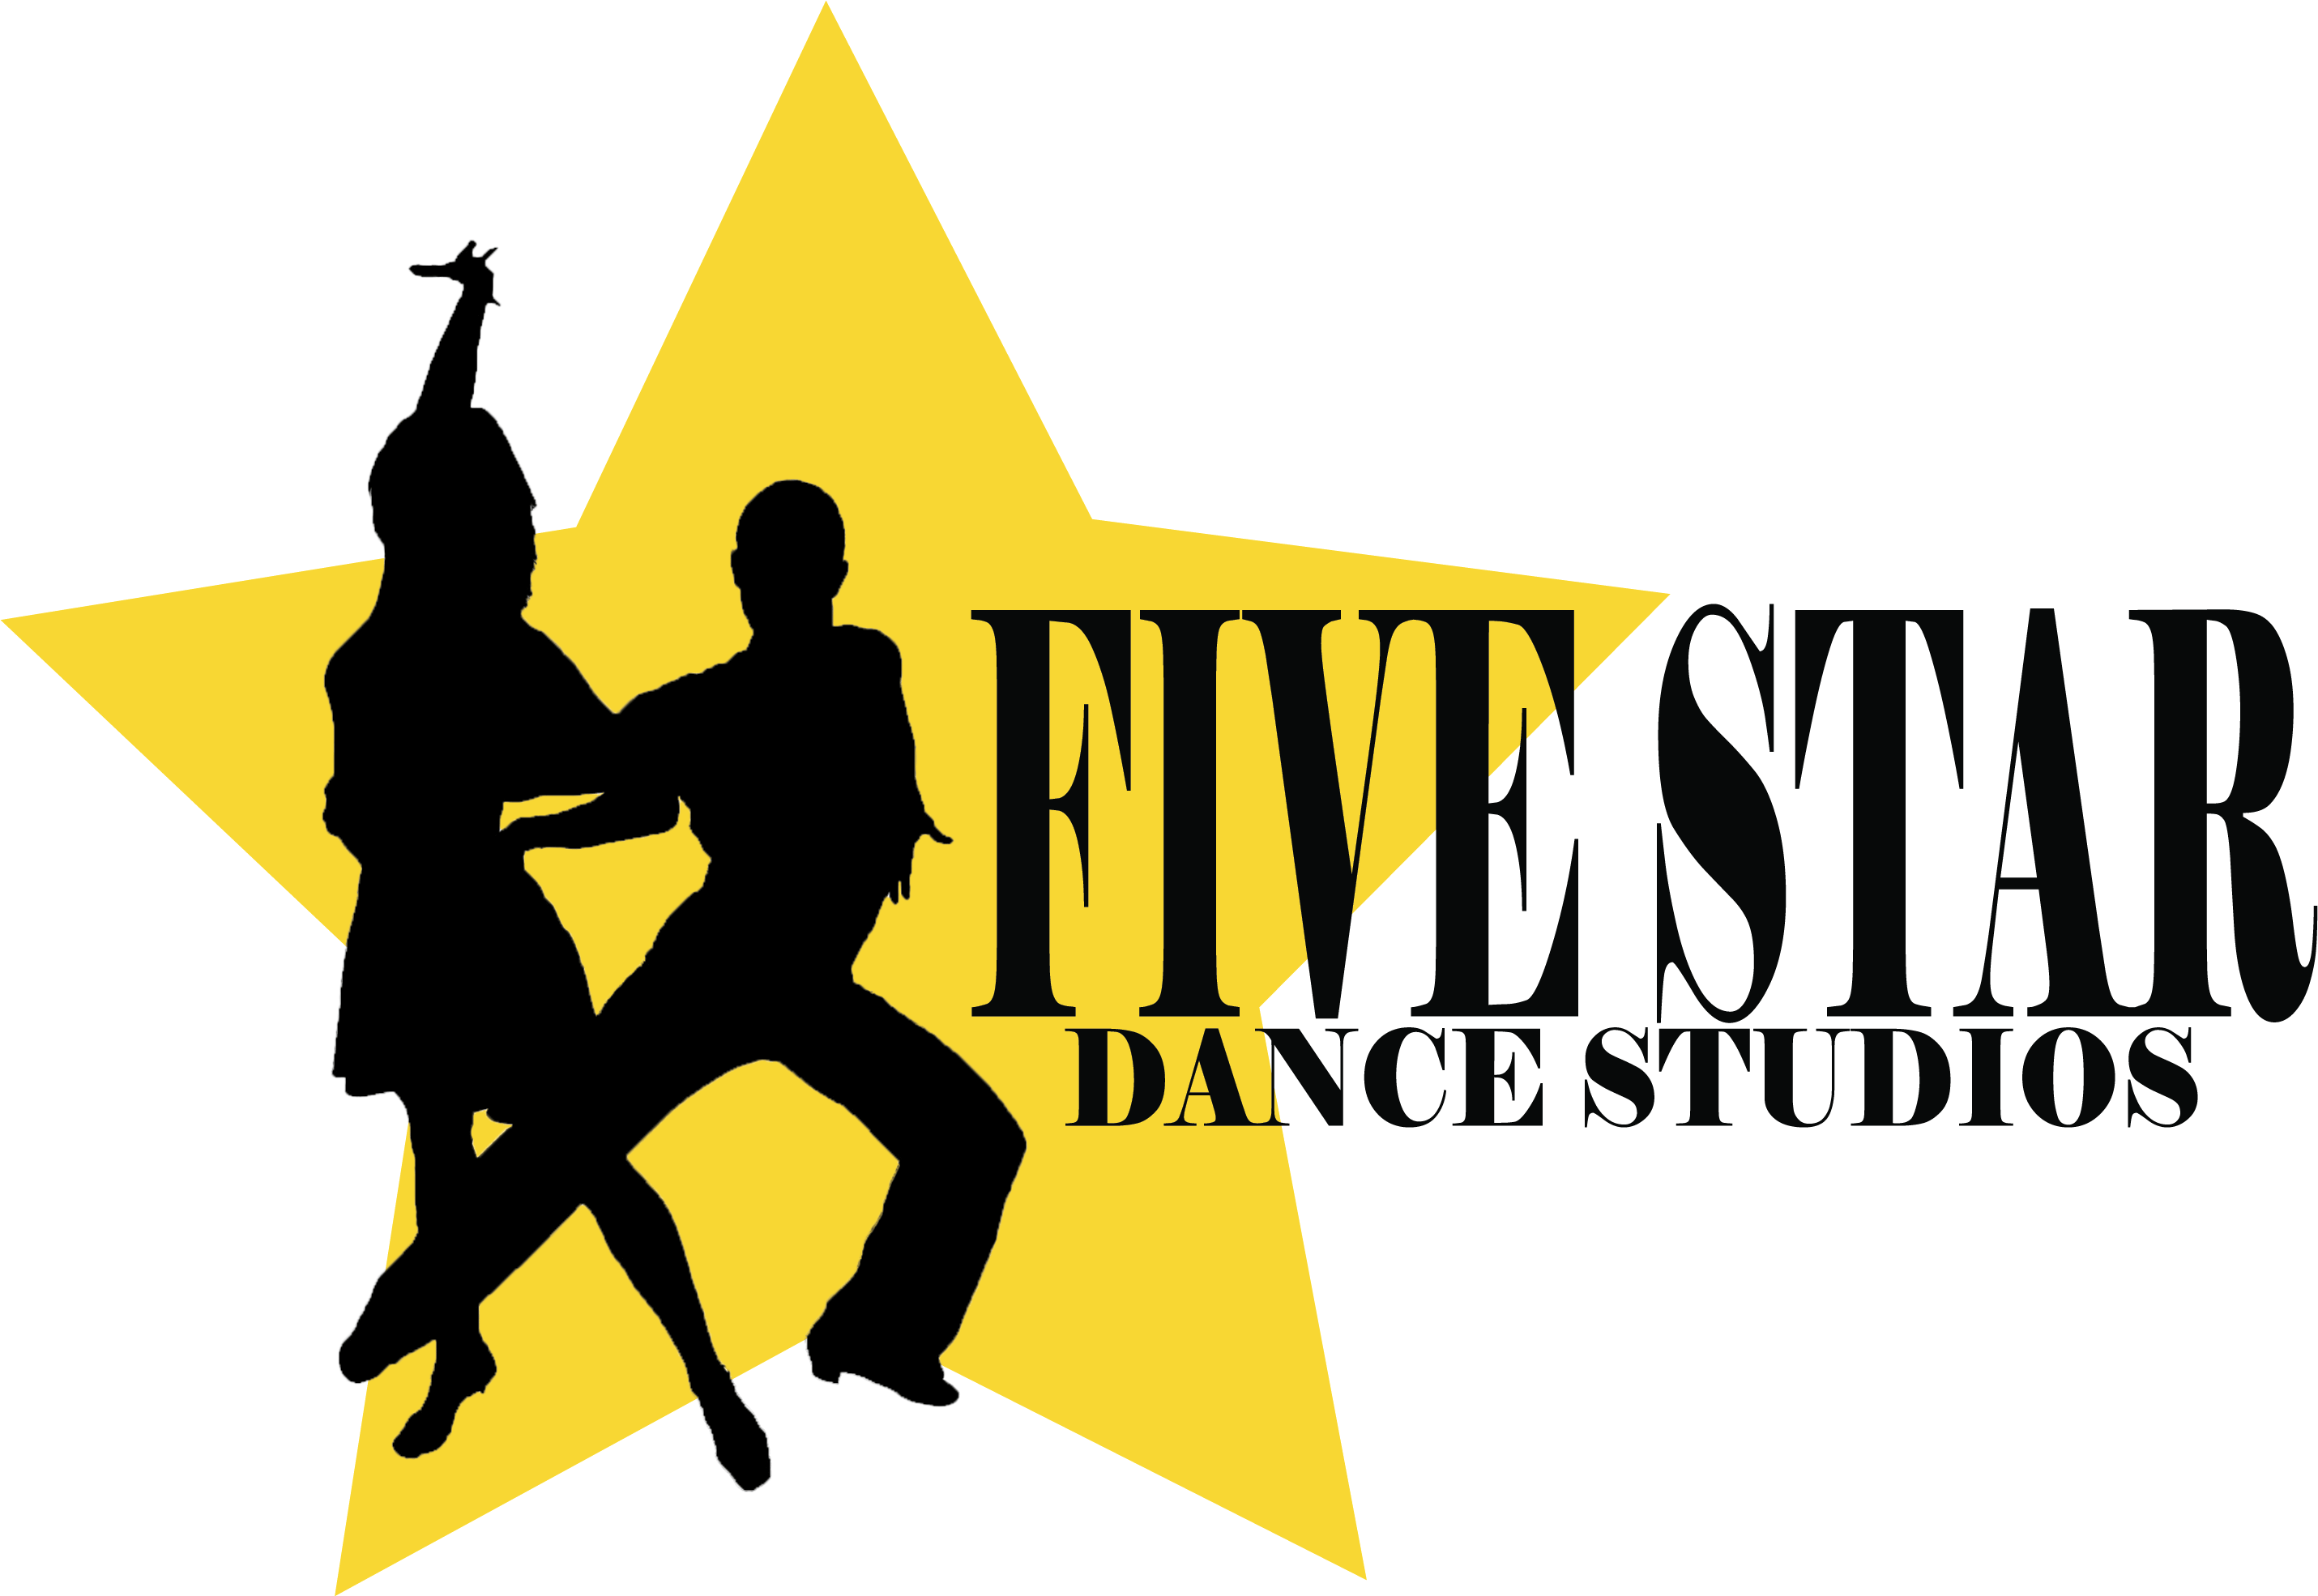 5 Star Dance Studios - Illustration, Hd Png Download